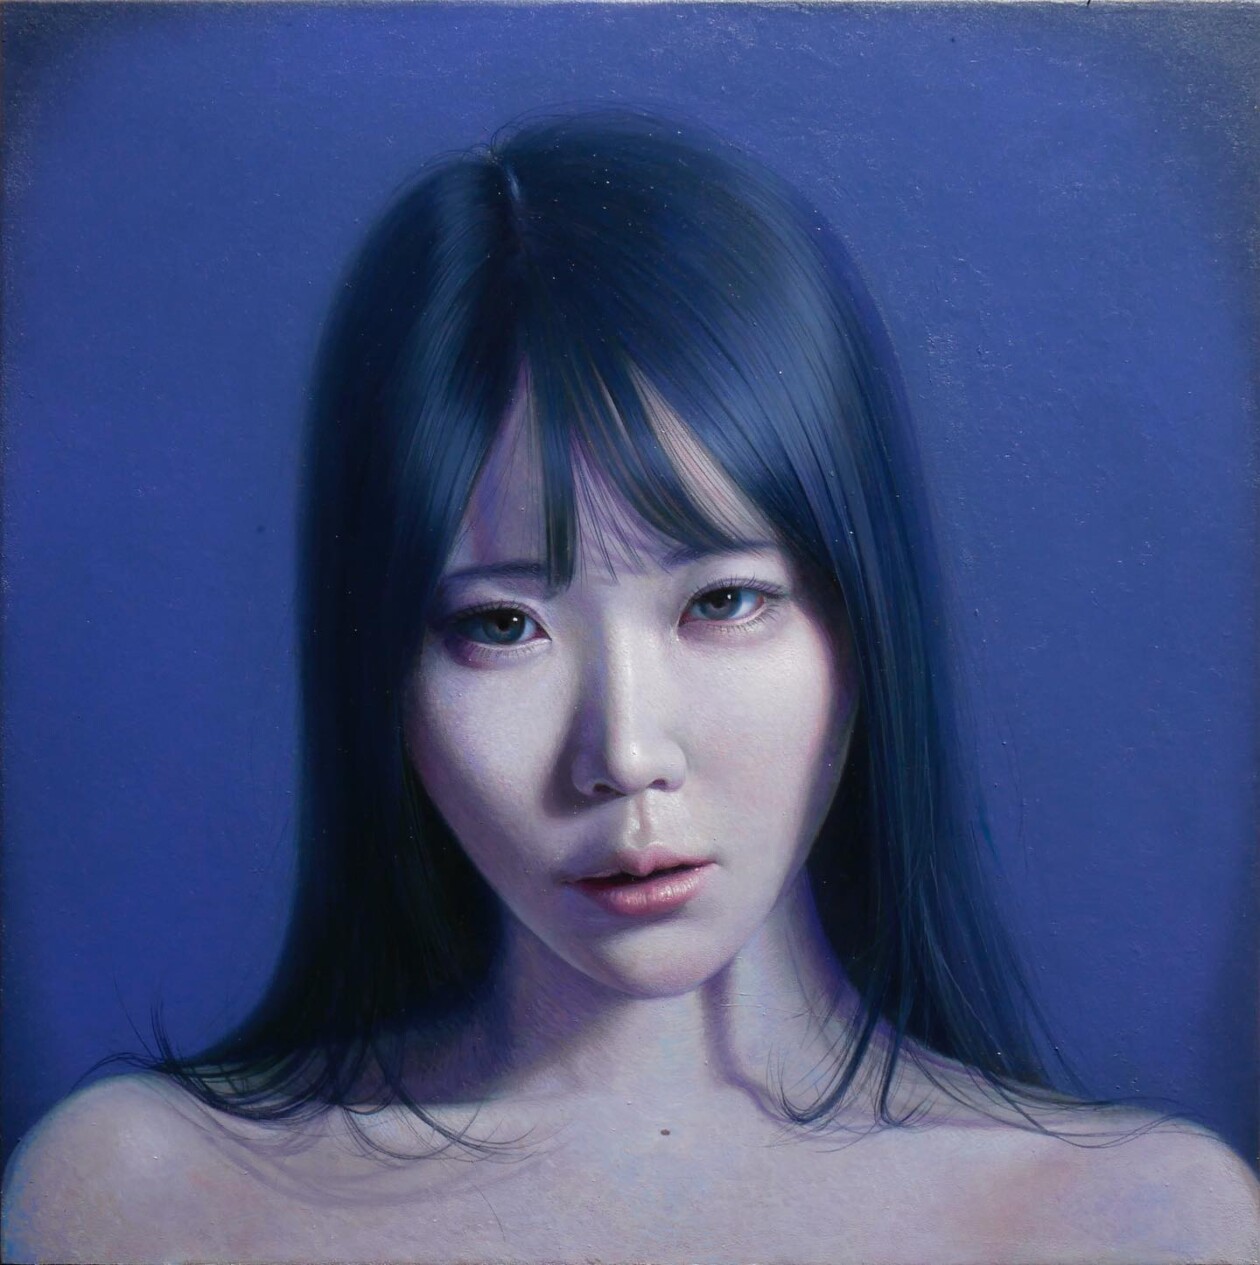 Capturing The Unseen, The Sublime Artistry Of Yosuke Kawashima (16)